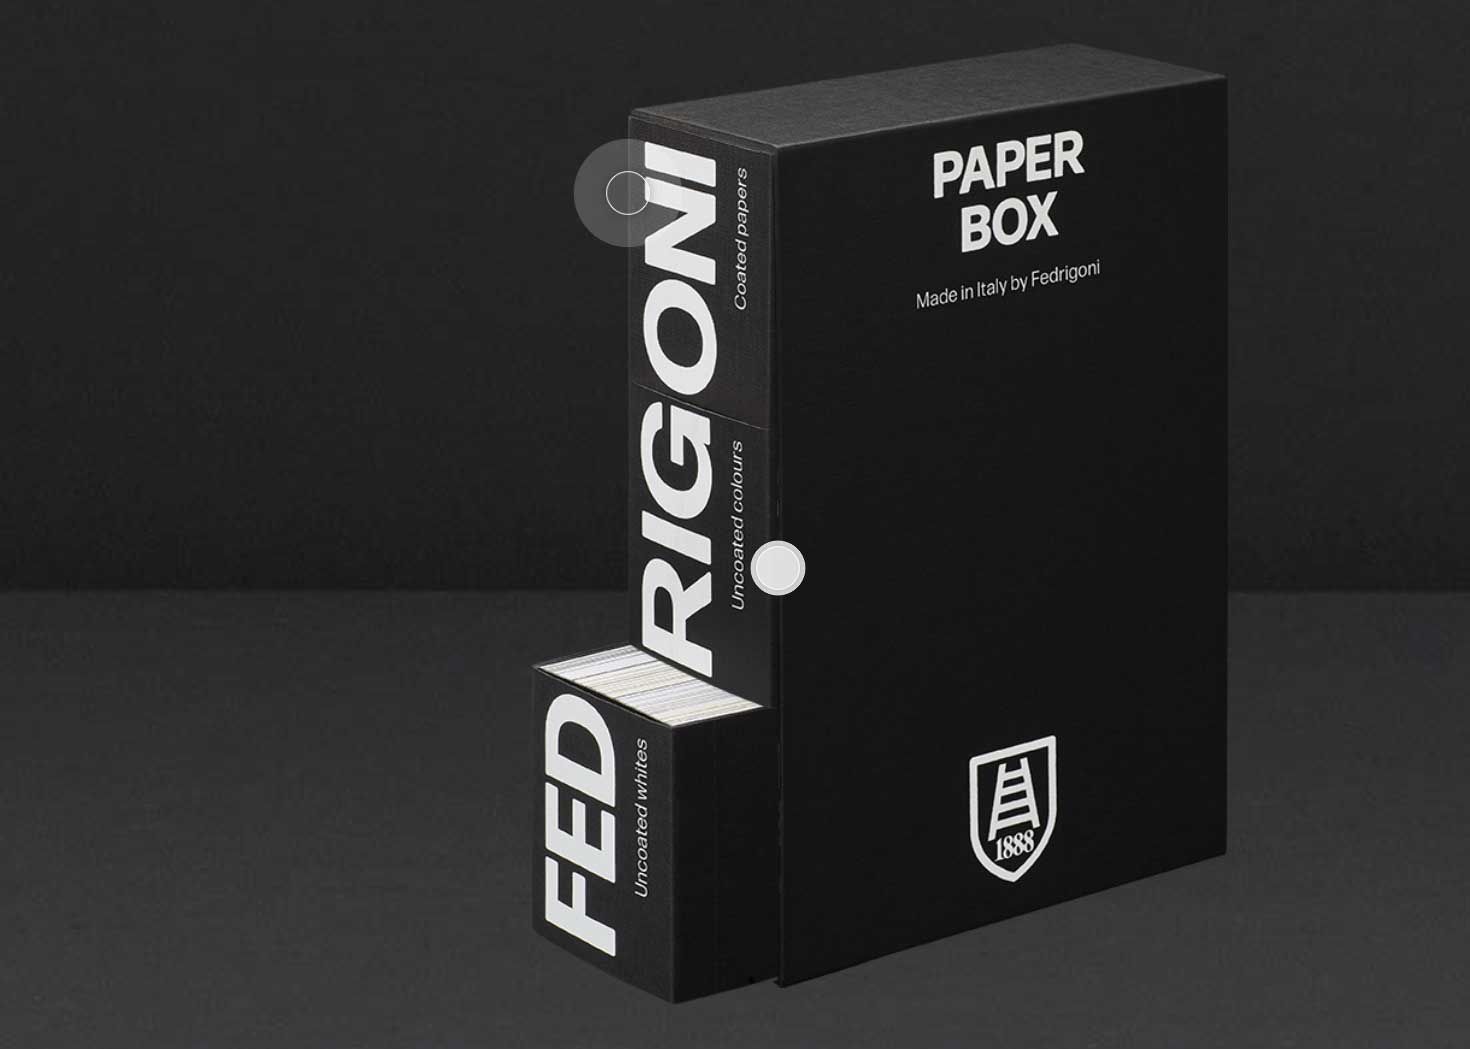 Fedrigoni Paper Box open